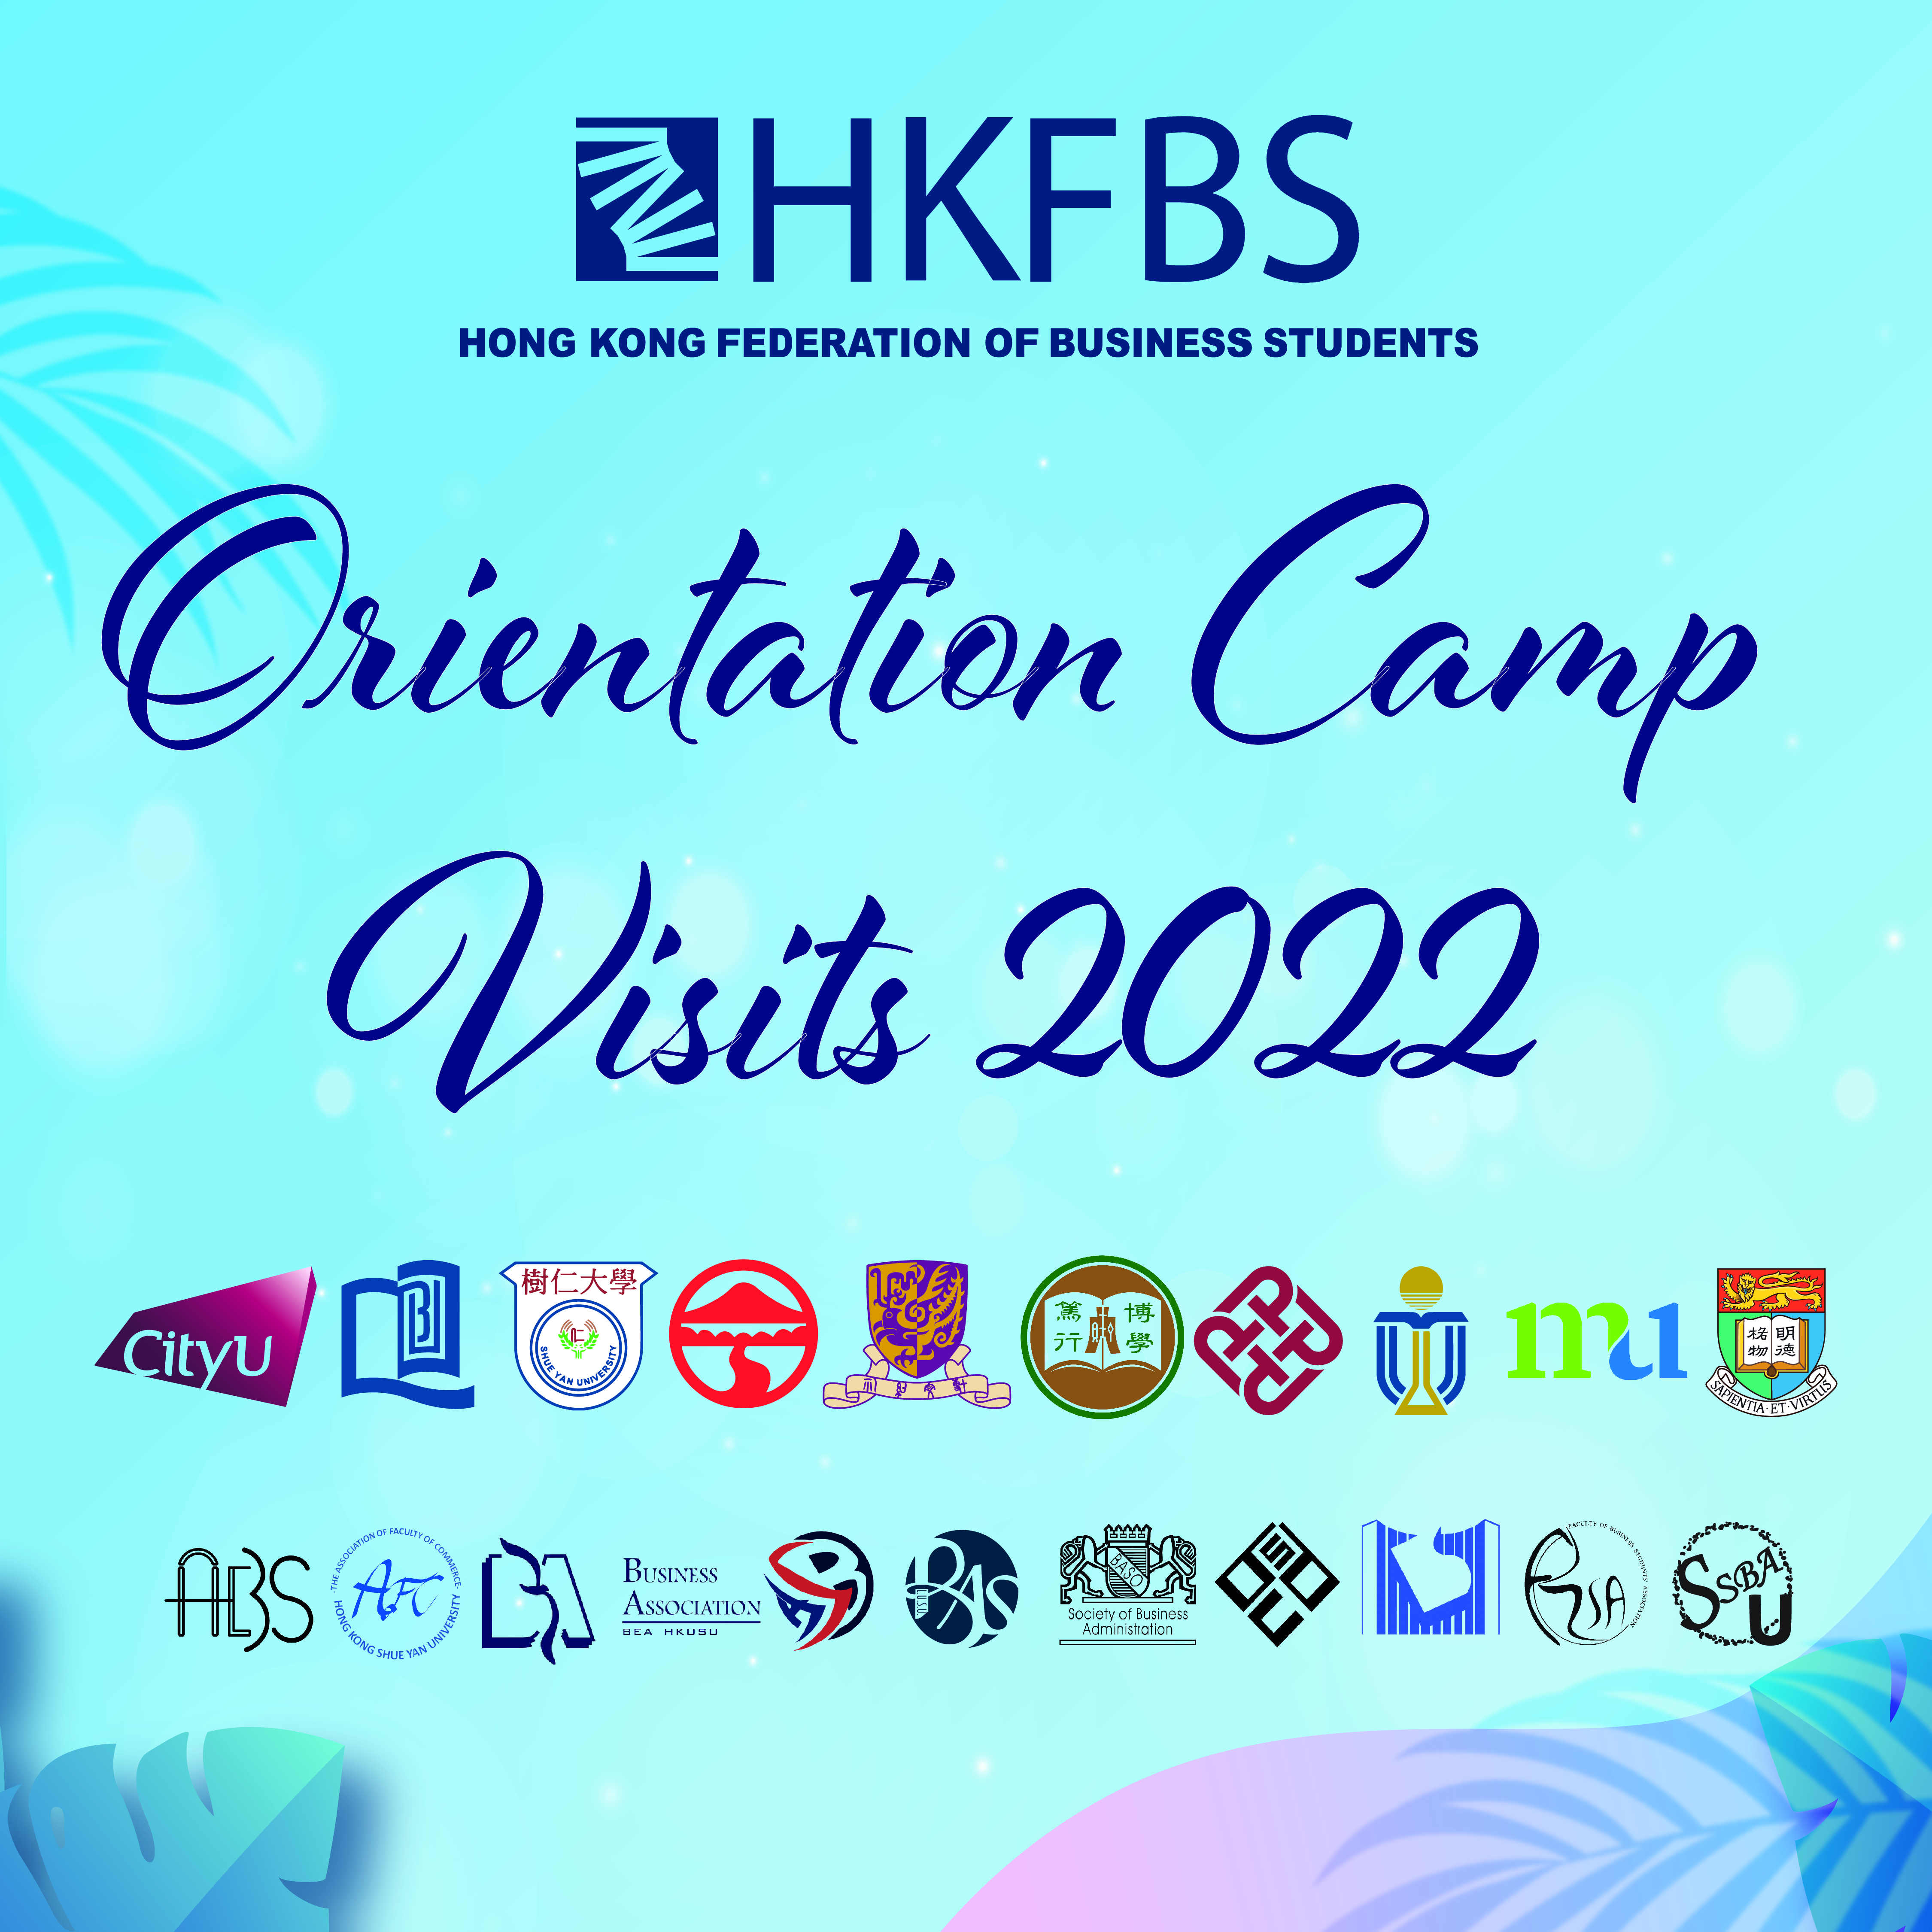 Orientation Camp Visits 2022